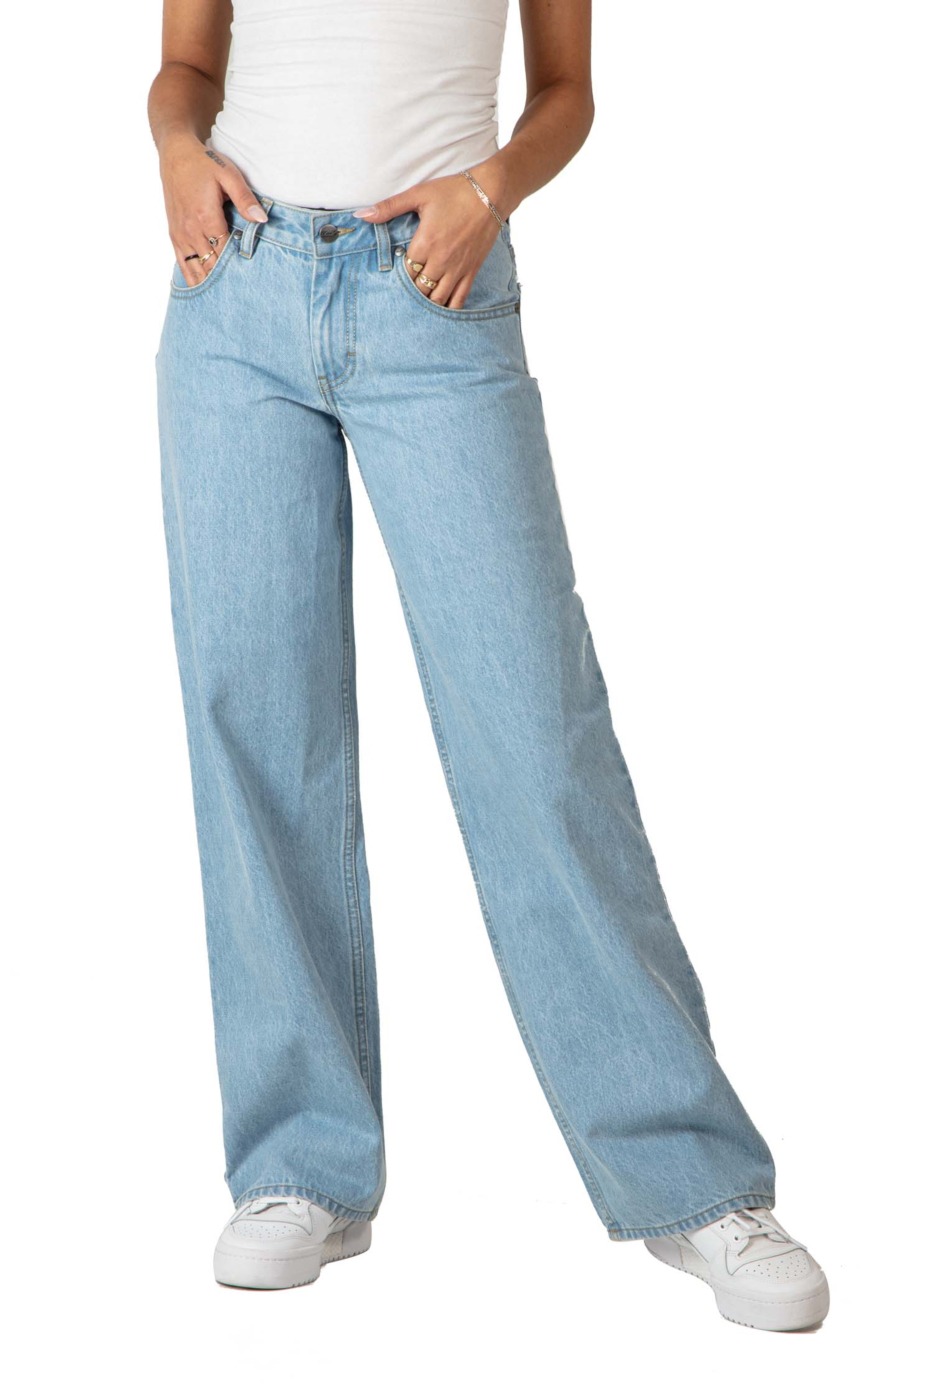 Women Holly Jeans Origin Light Blue REELL-SHOP | The Official Reell ...